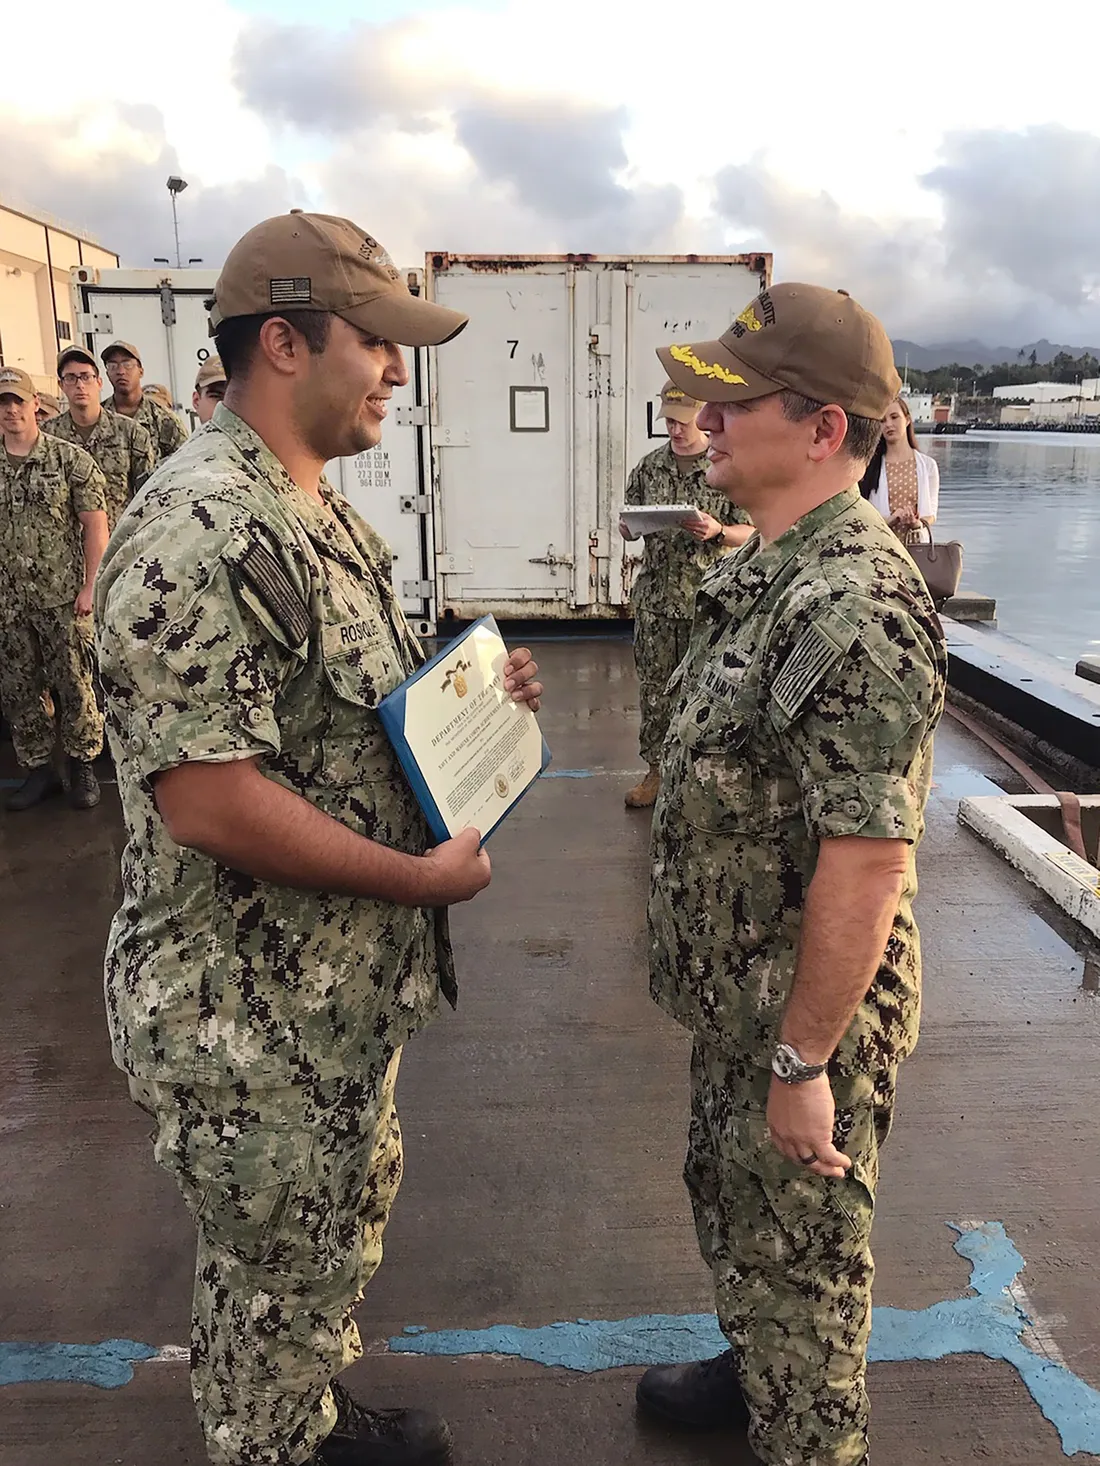 Two people in army uniform talking.